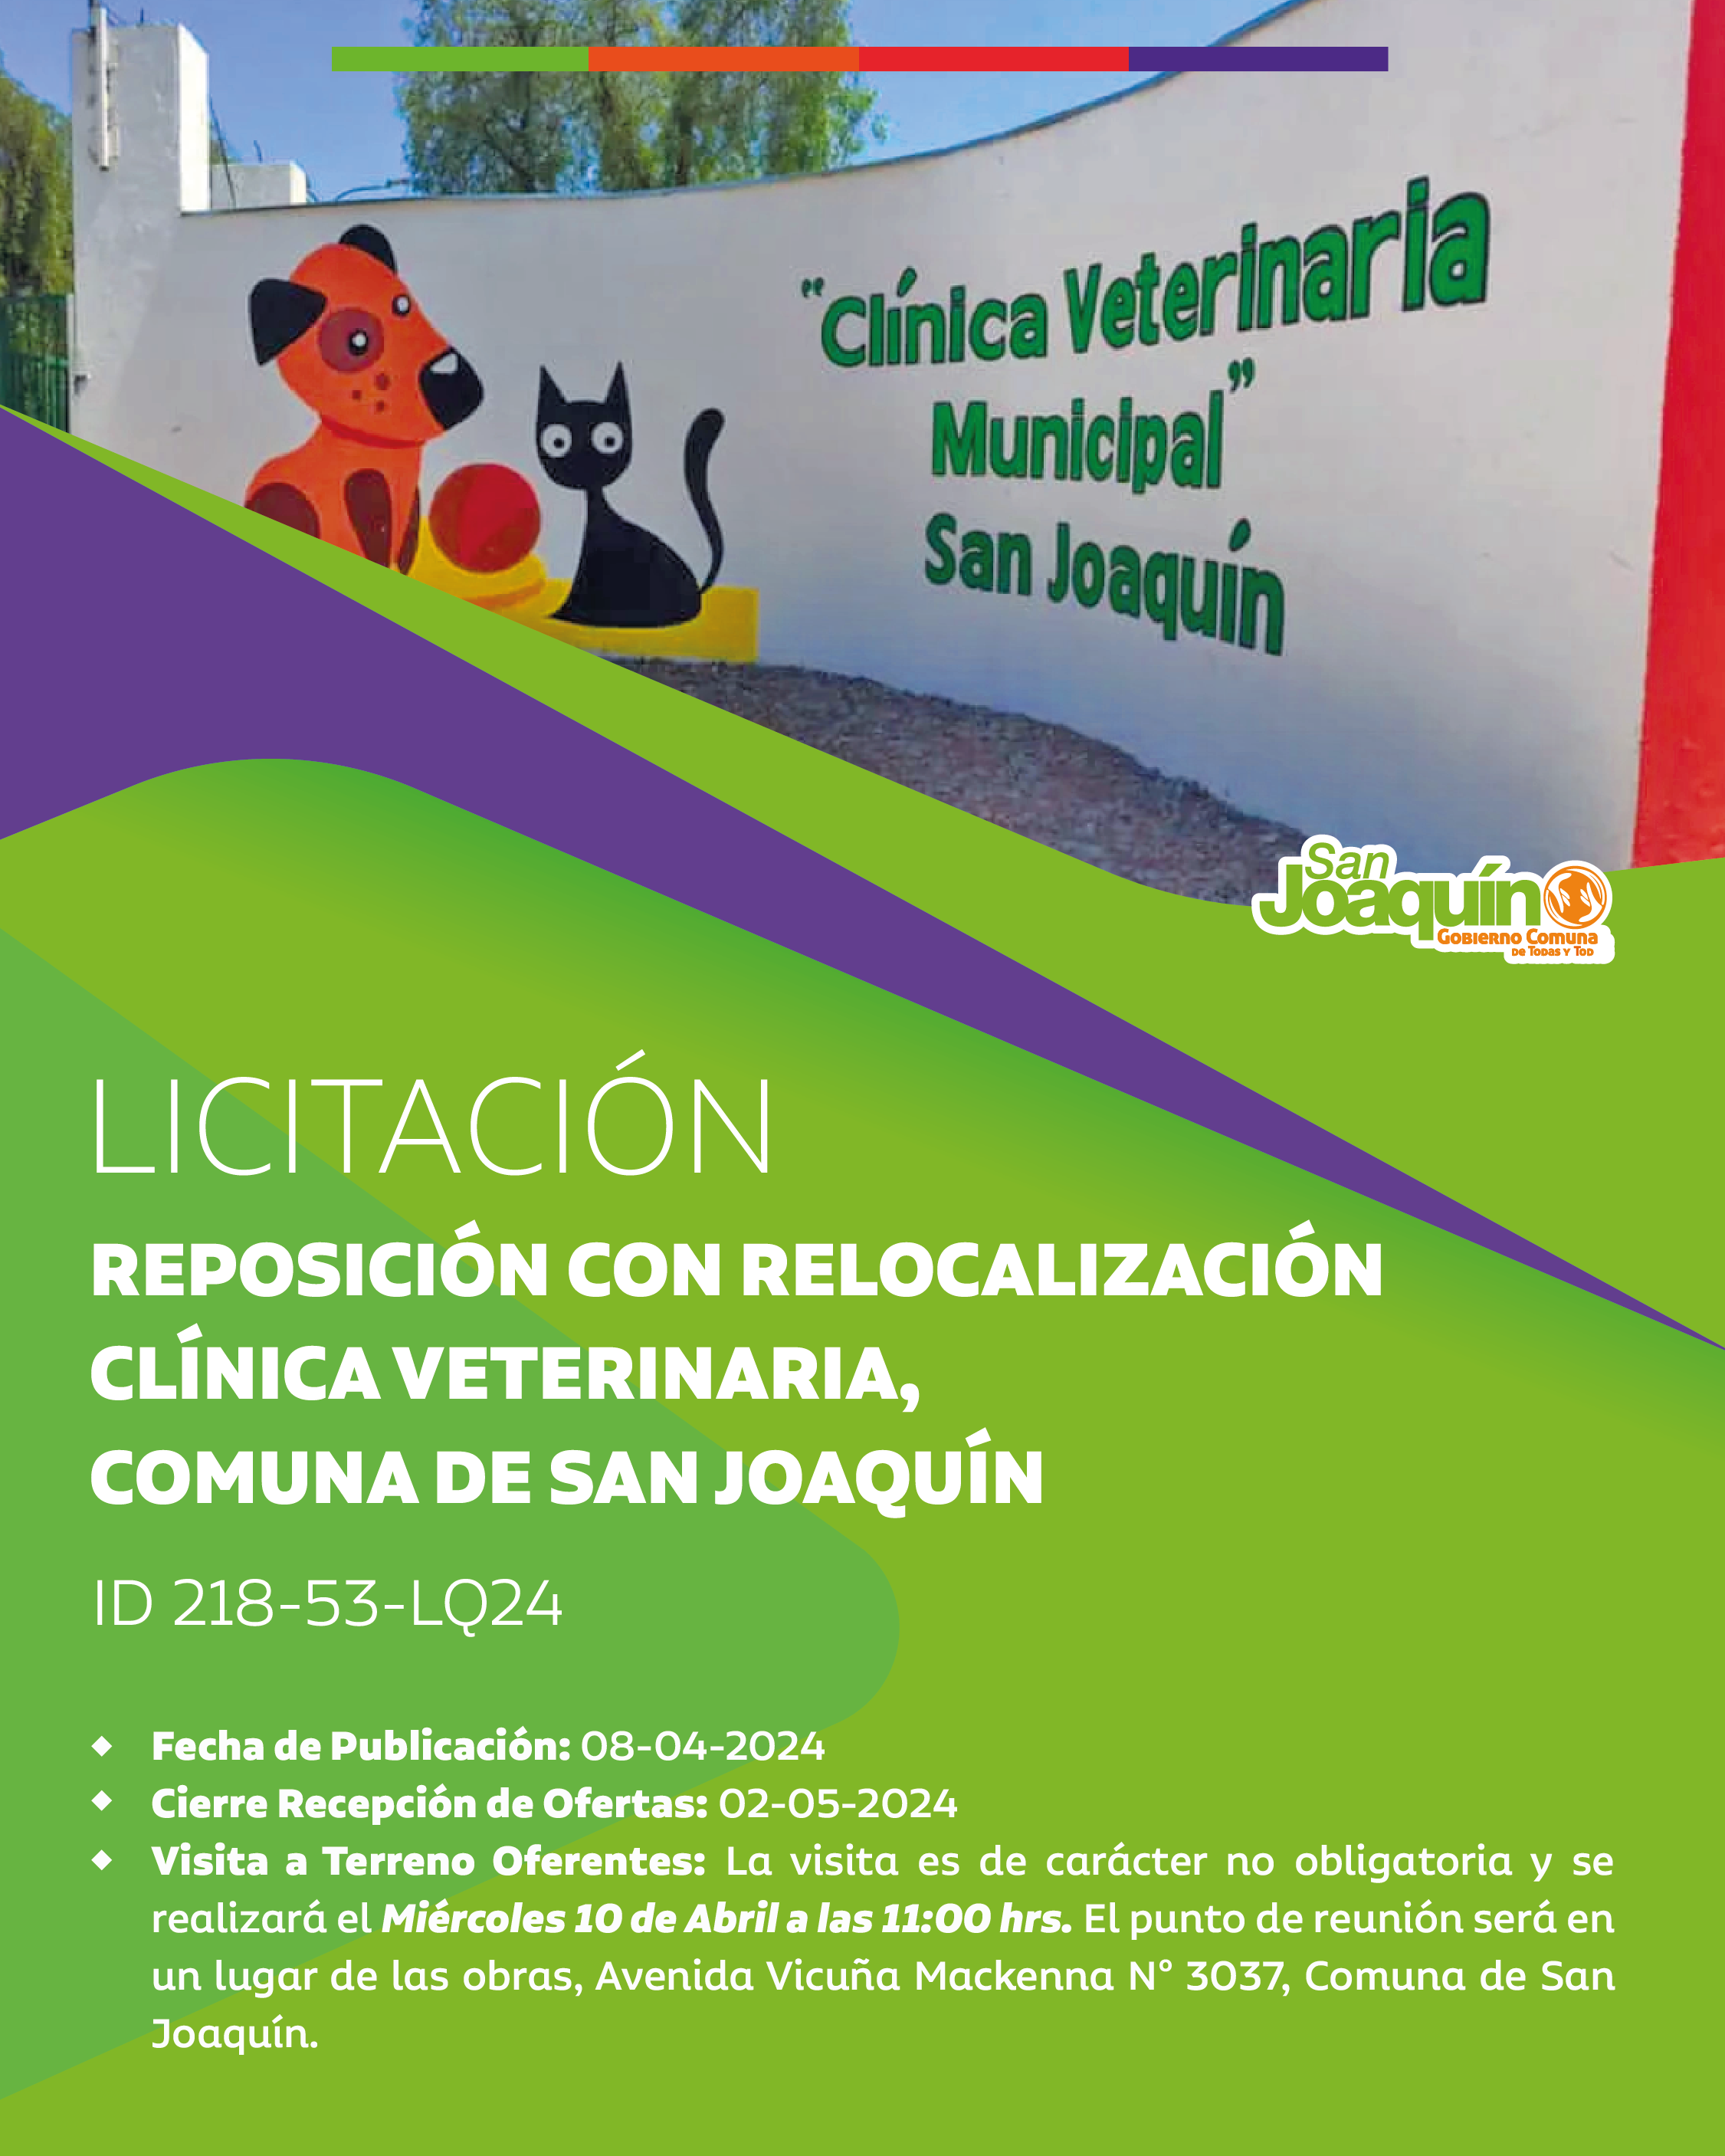 Licitaciones-RRSS-reposicion-relocalizacion-clinica-veterinaria-02